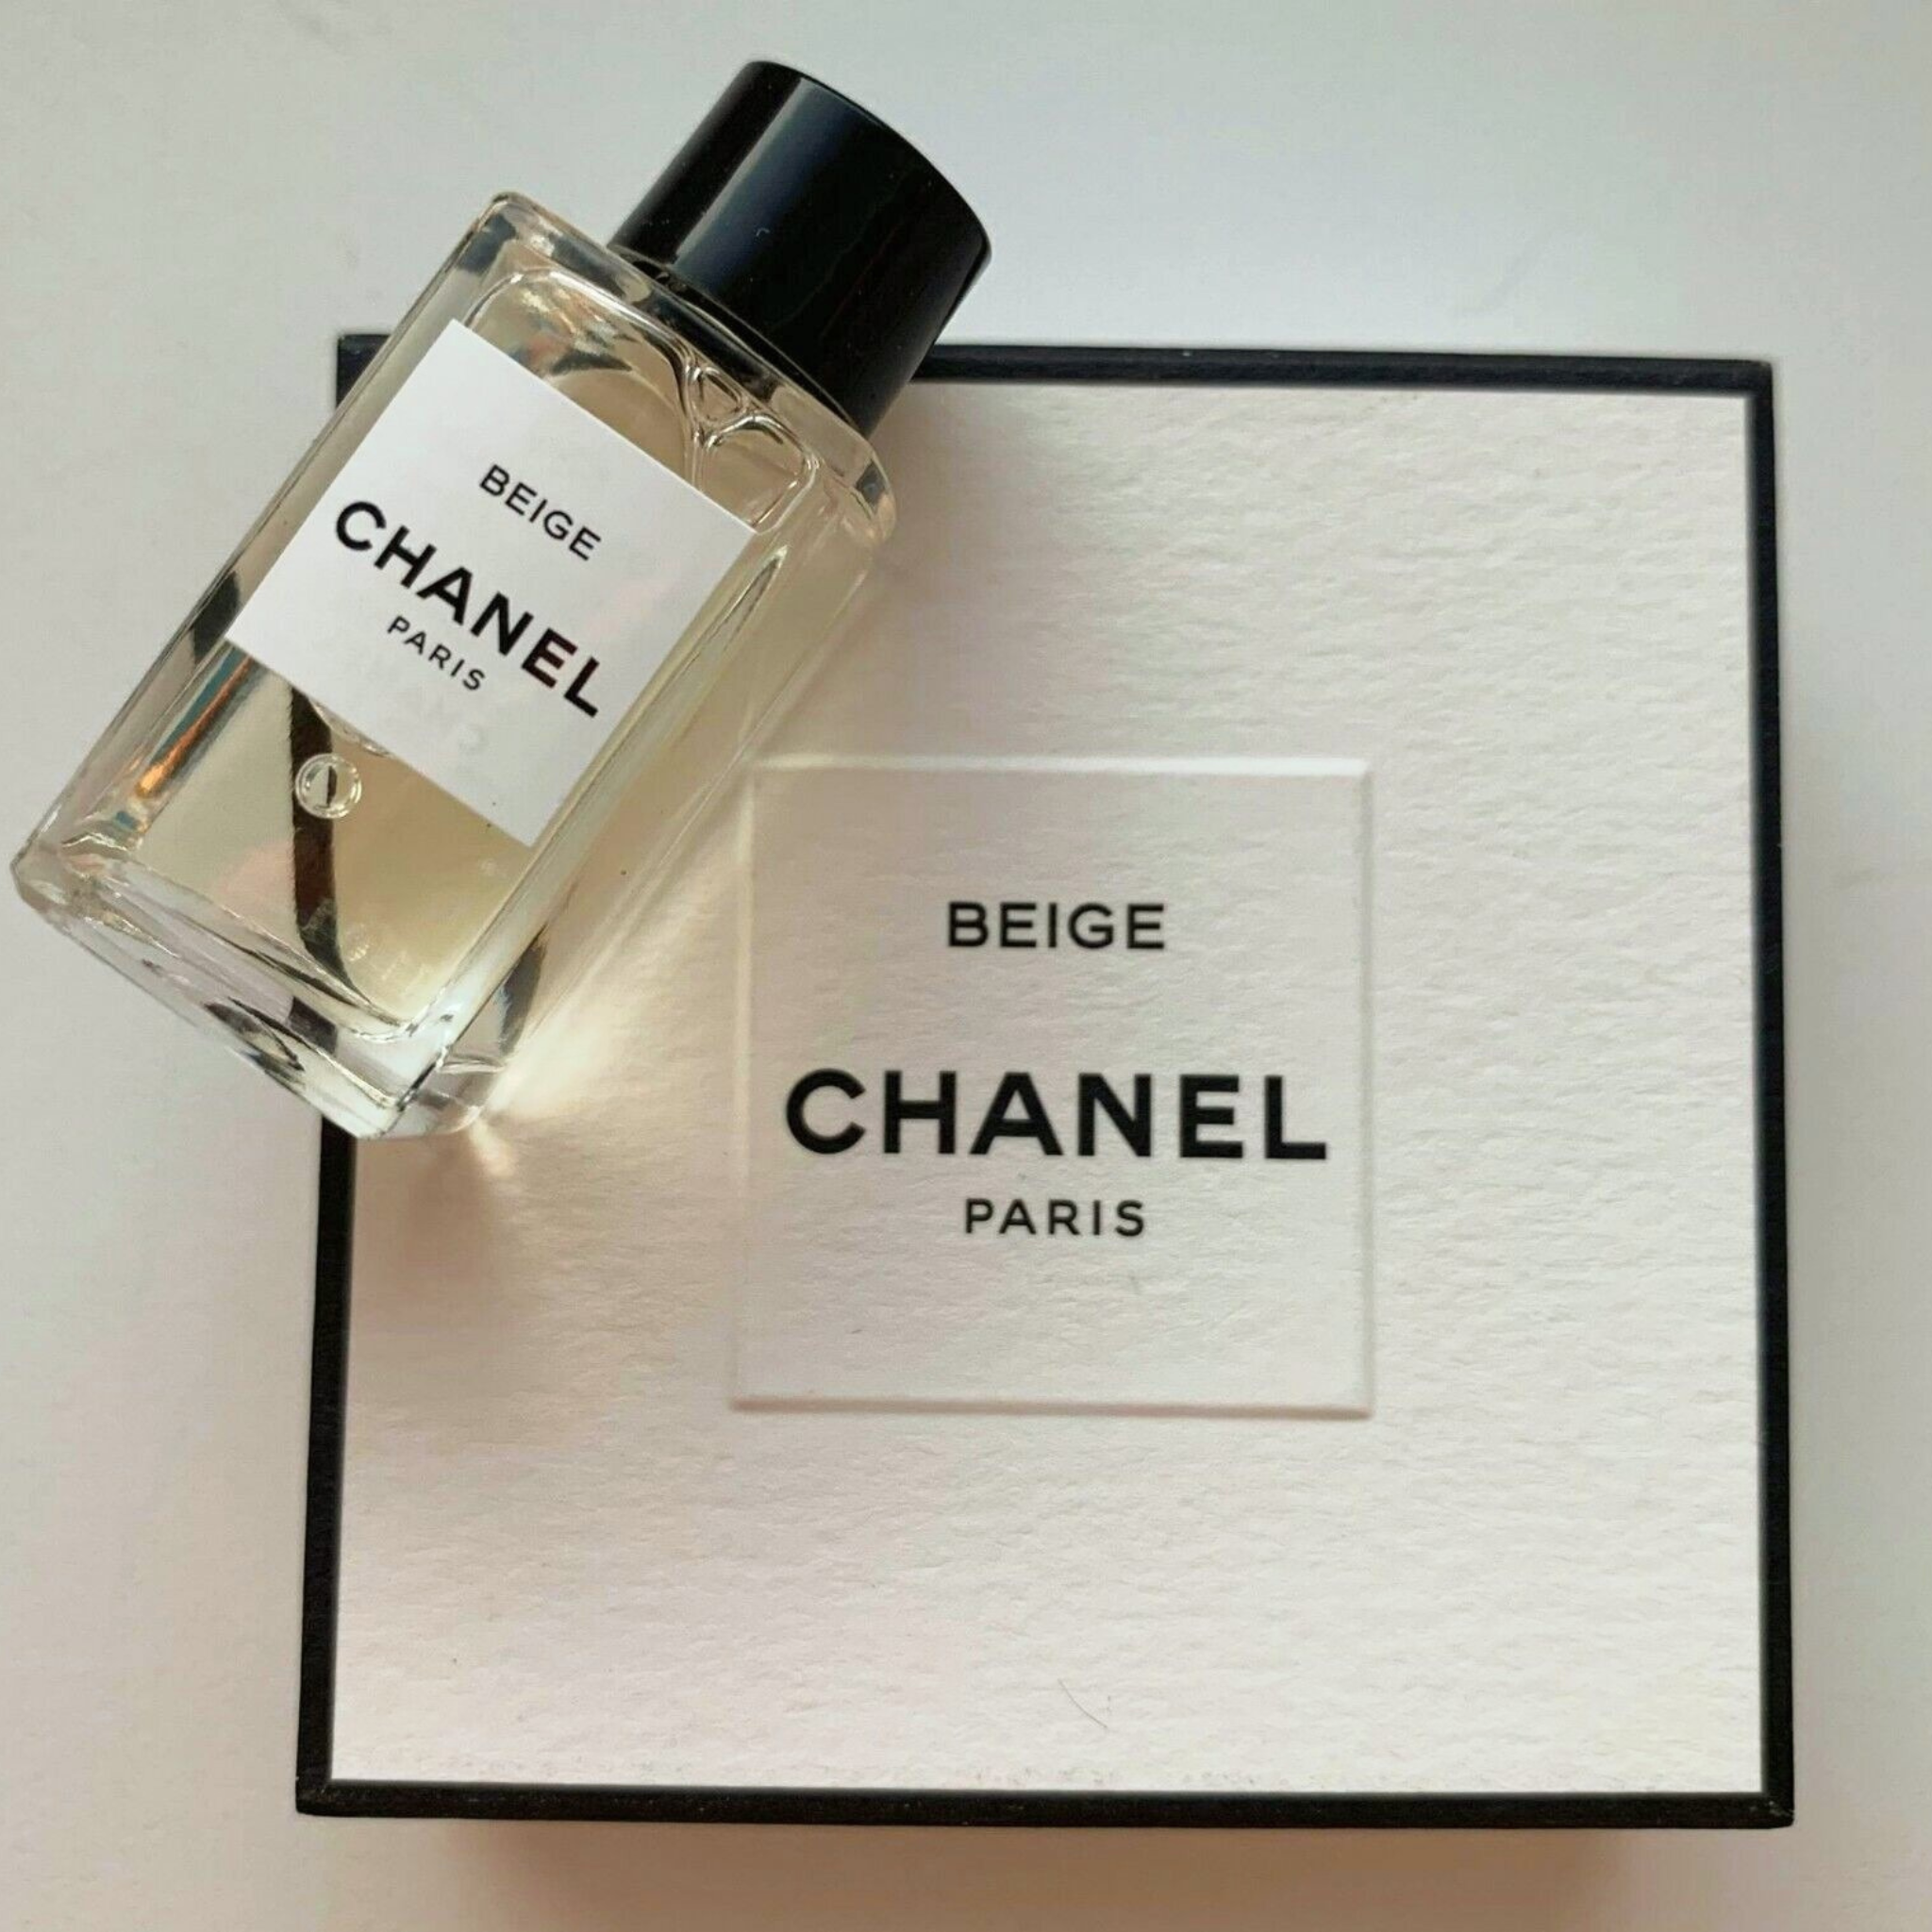 Les Exclusifs de Chanel Beige Chanel perfume  a fragrance for women 2008